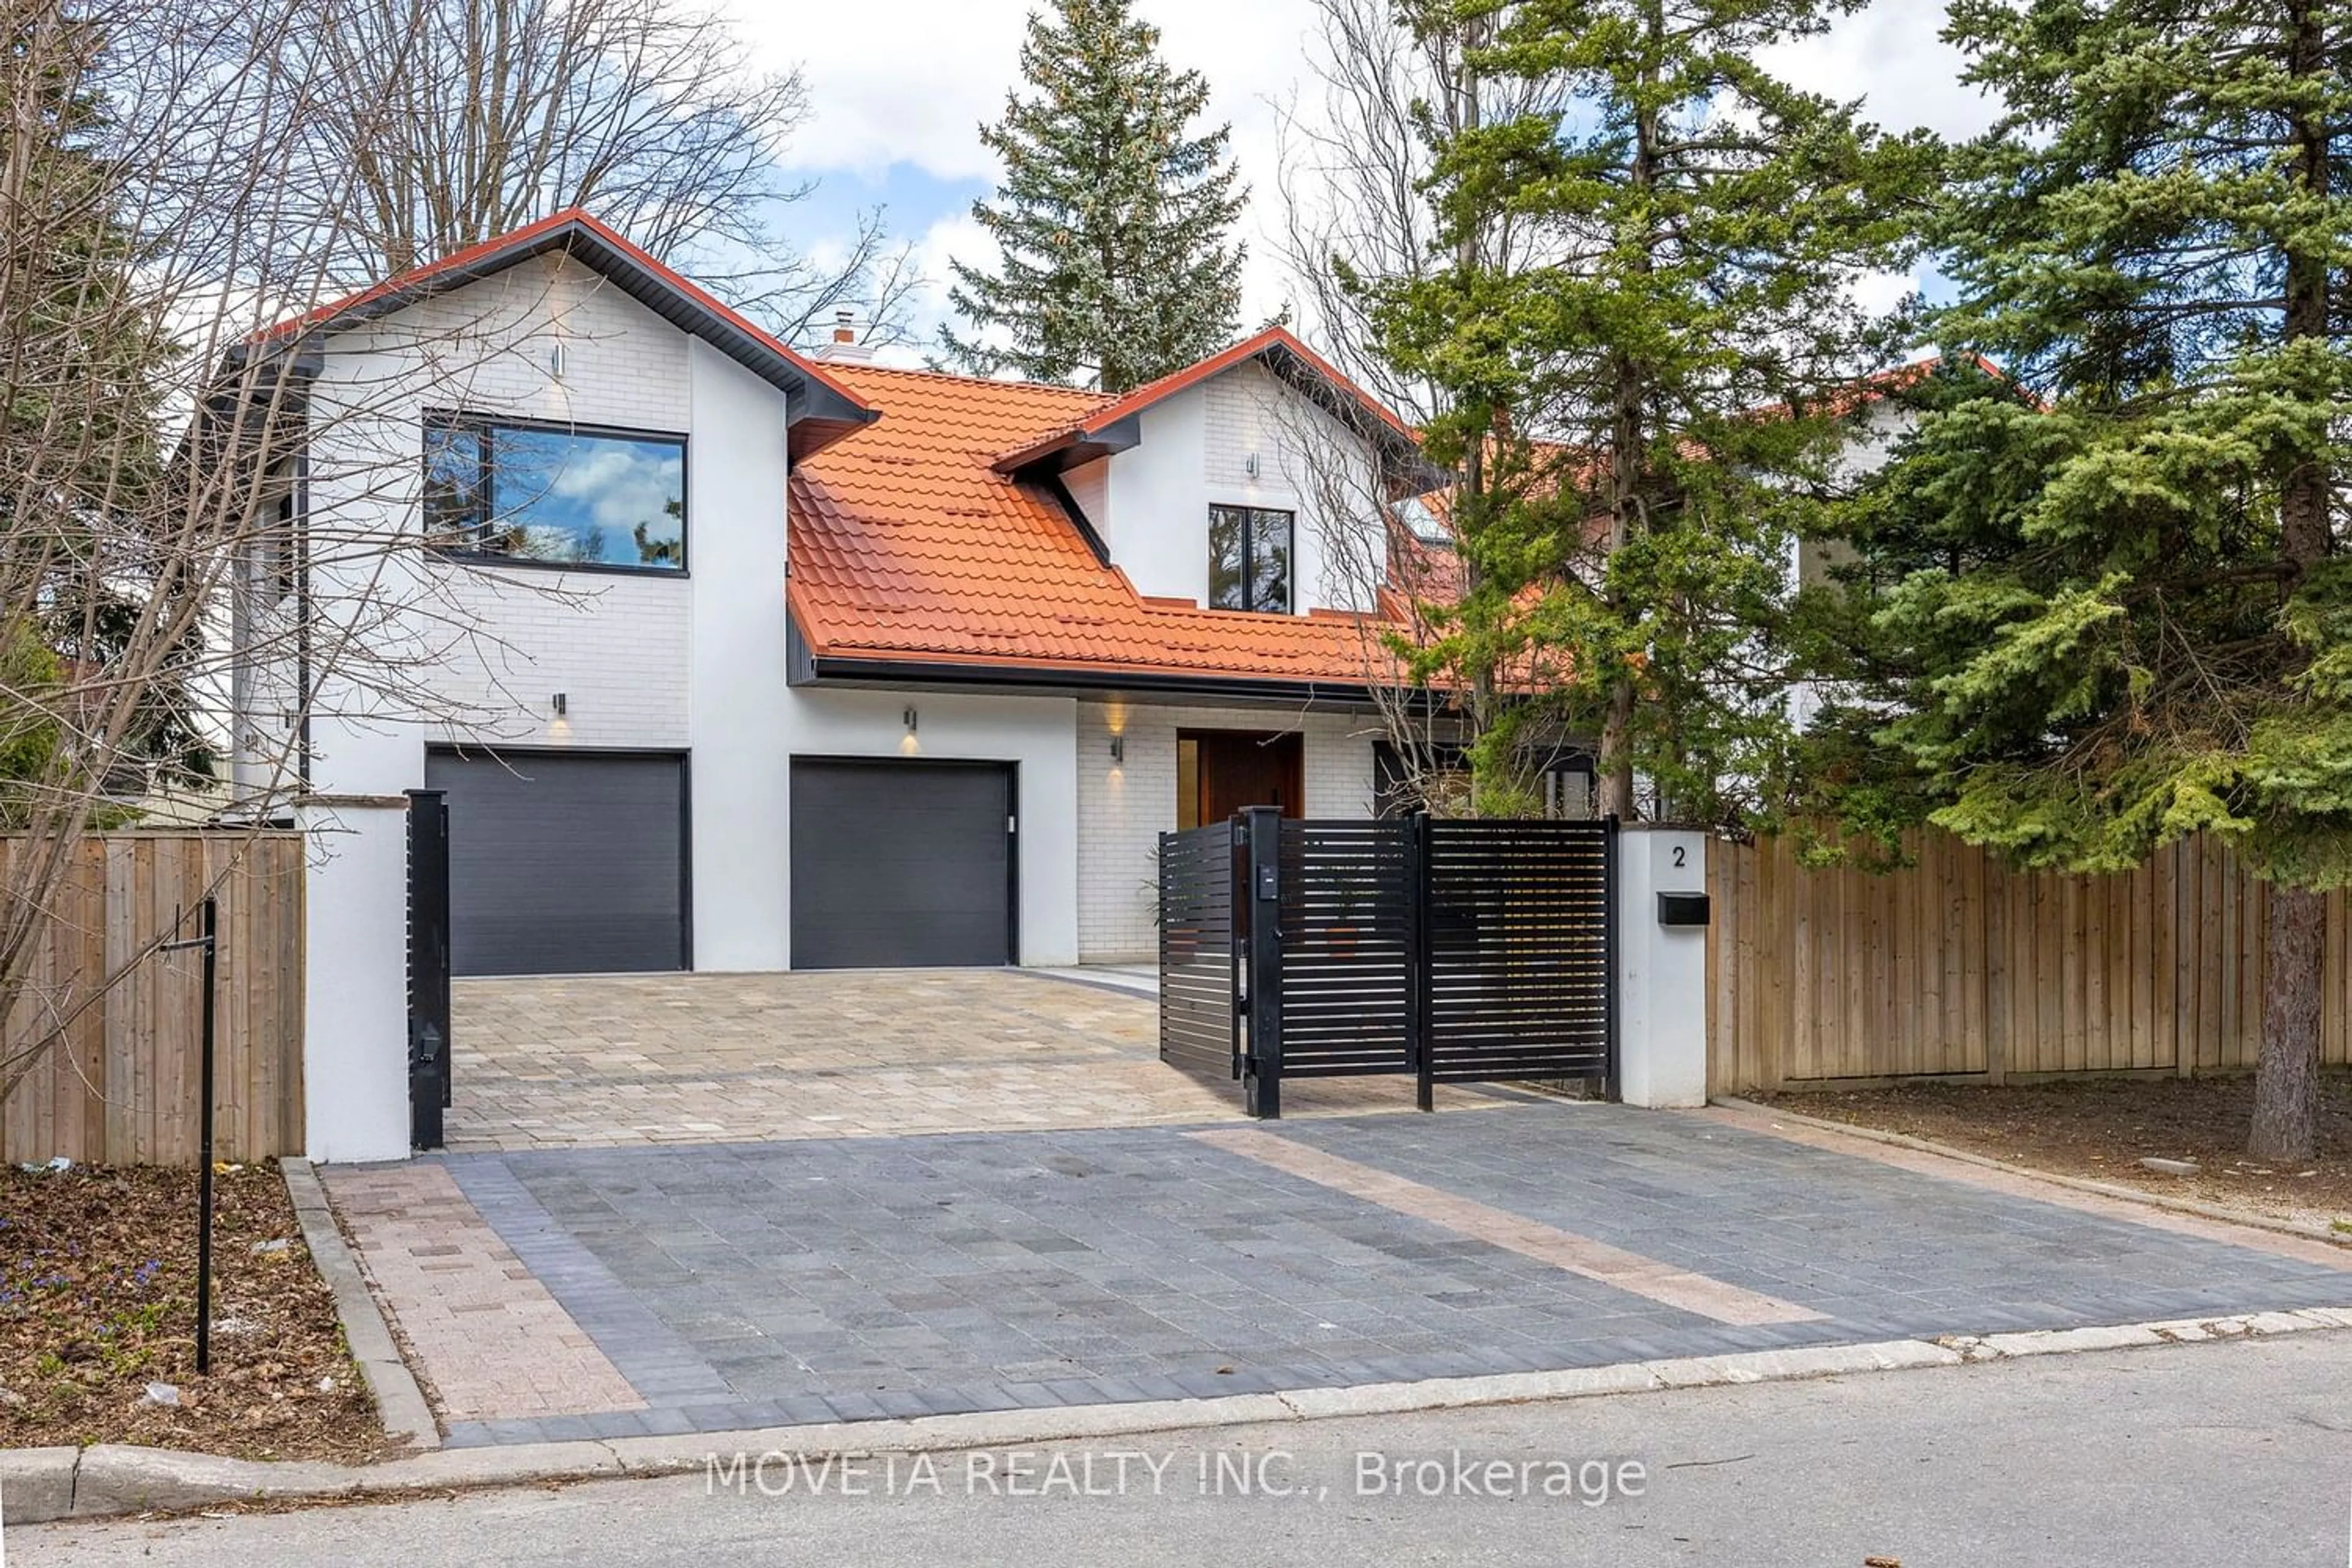 Home with brick exterior material for 2 Addison Cres, Toronto Ontario M3B 1K8